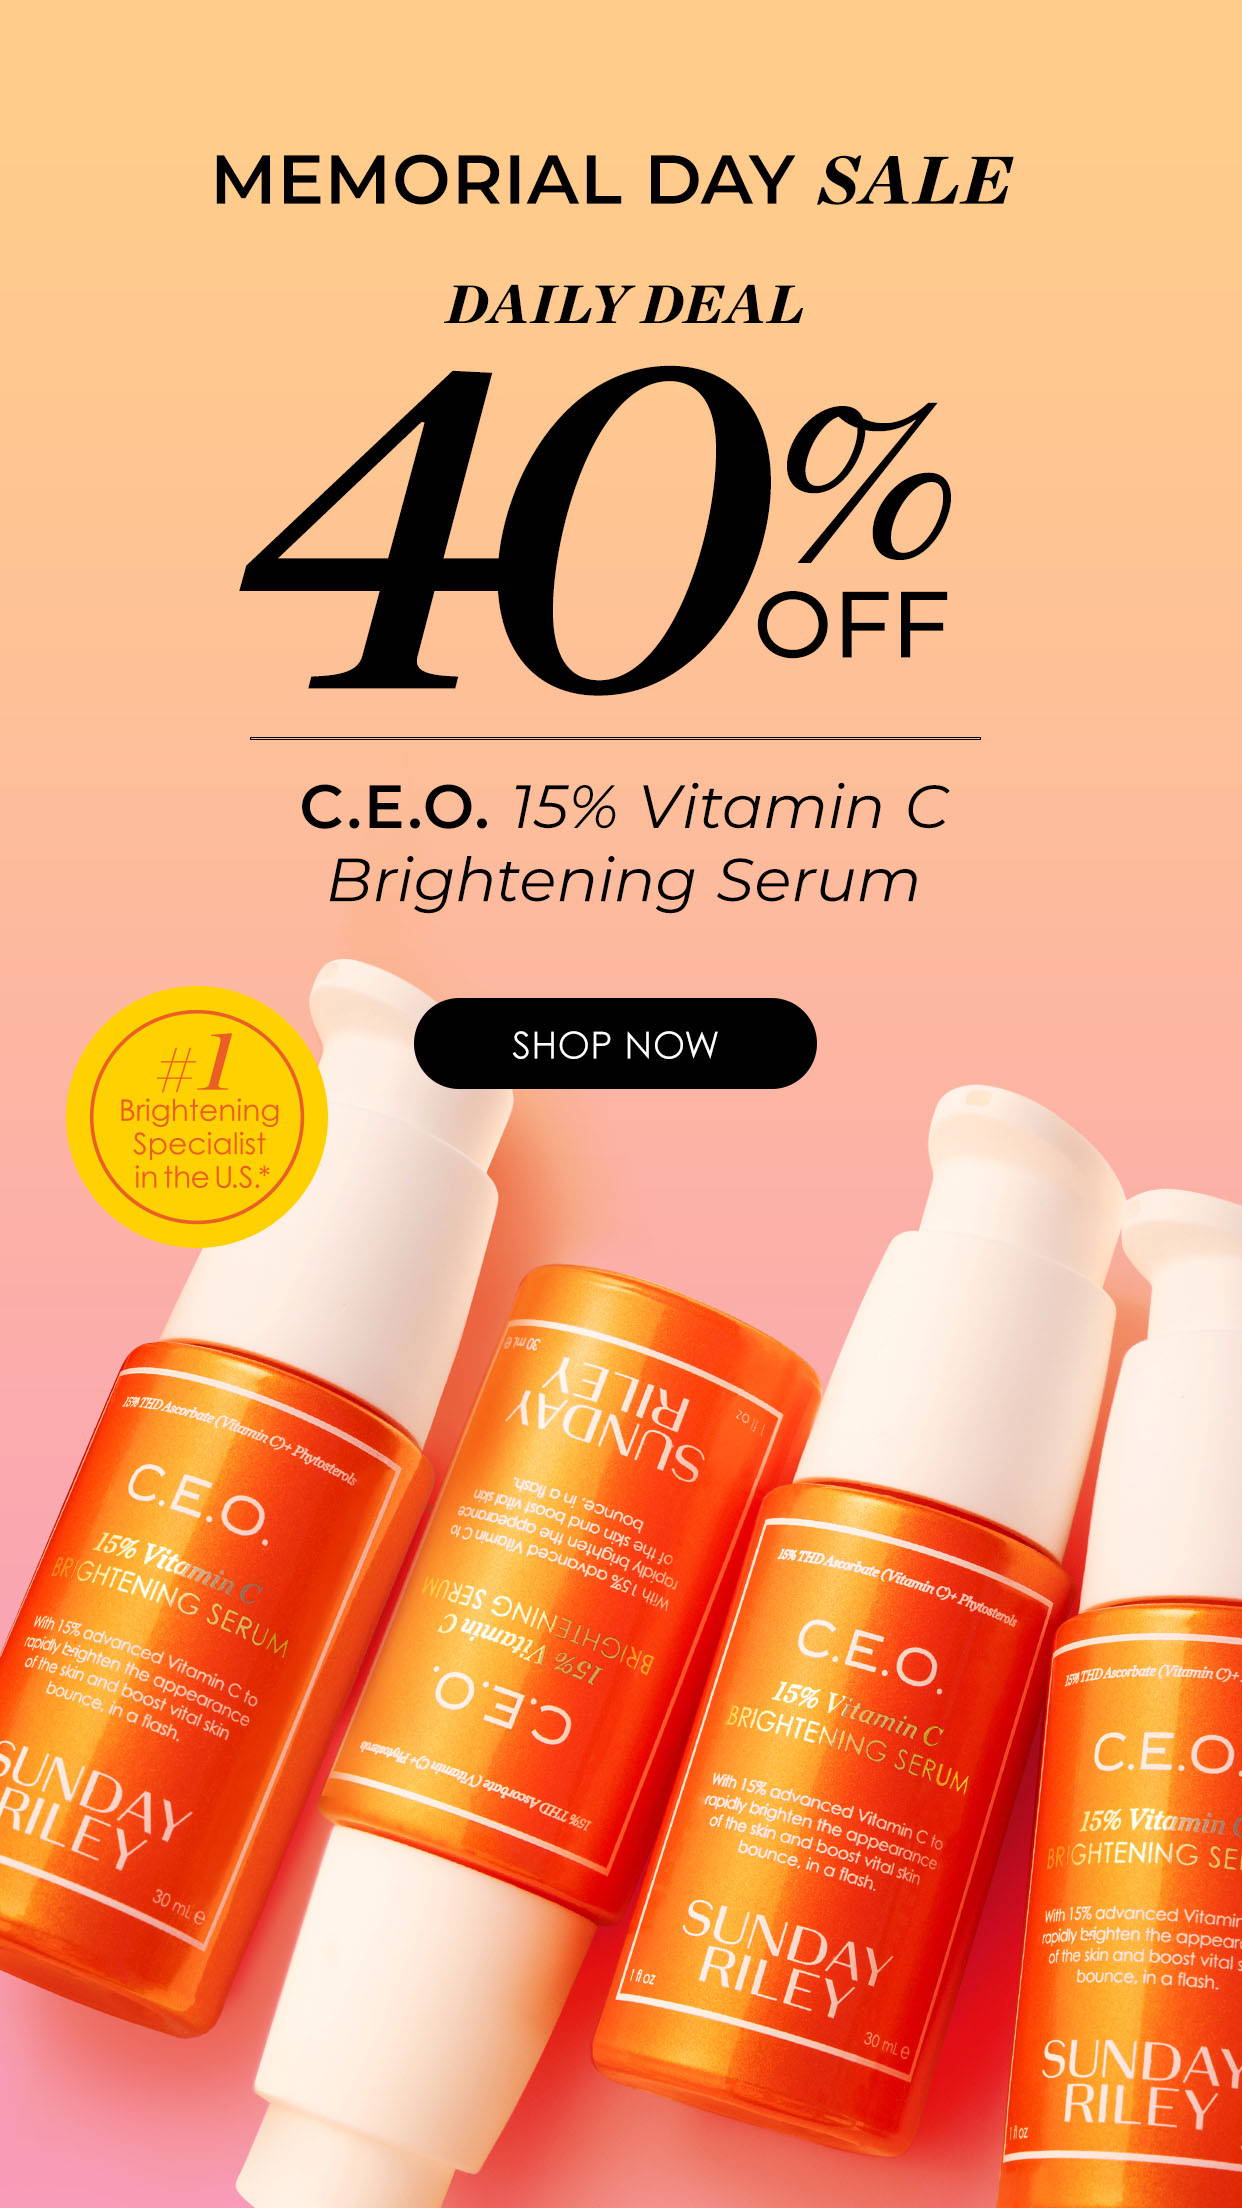 memorial day sale - daily deal - 40% off c.e.o. 15% vitamin c brightening serum